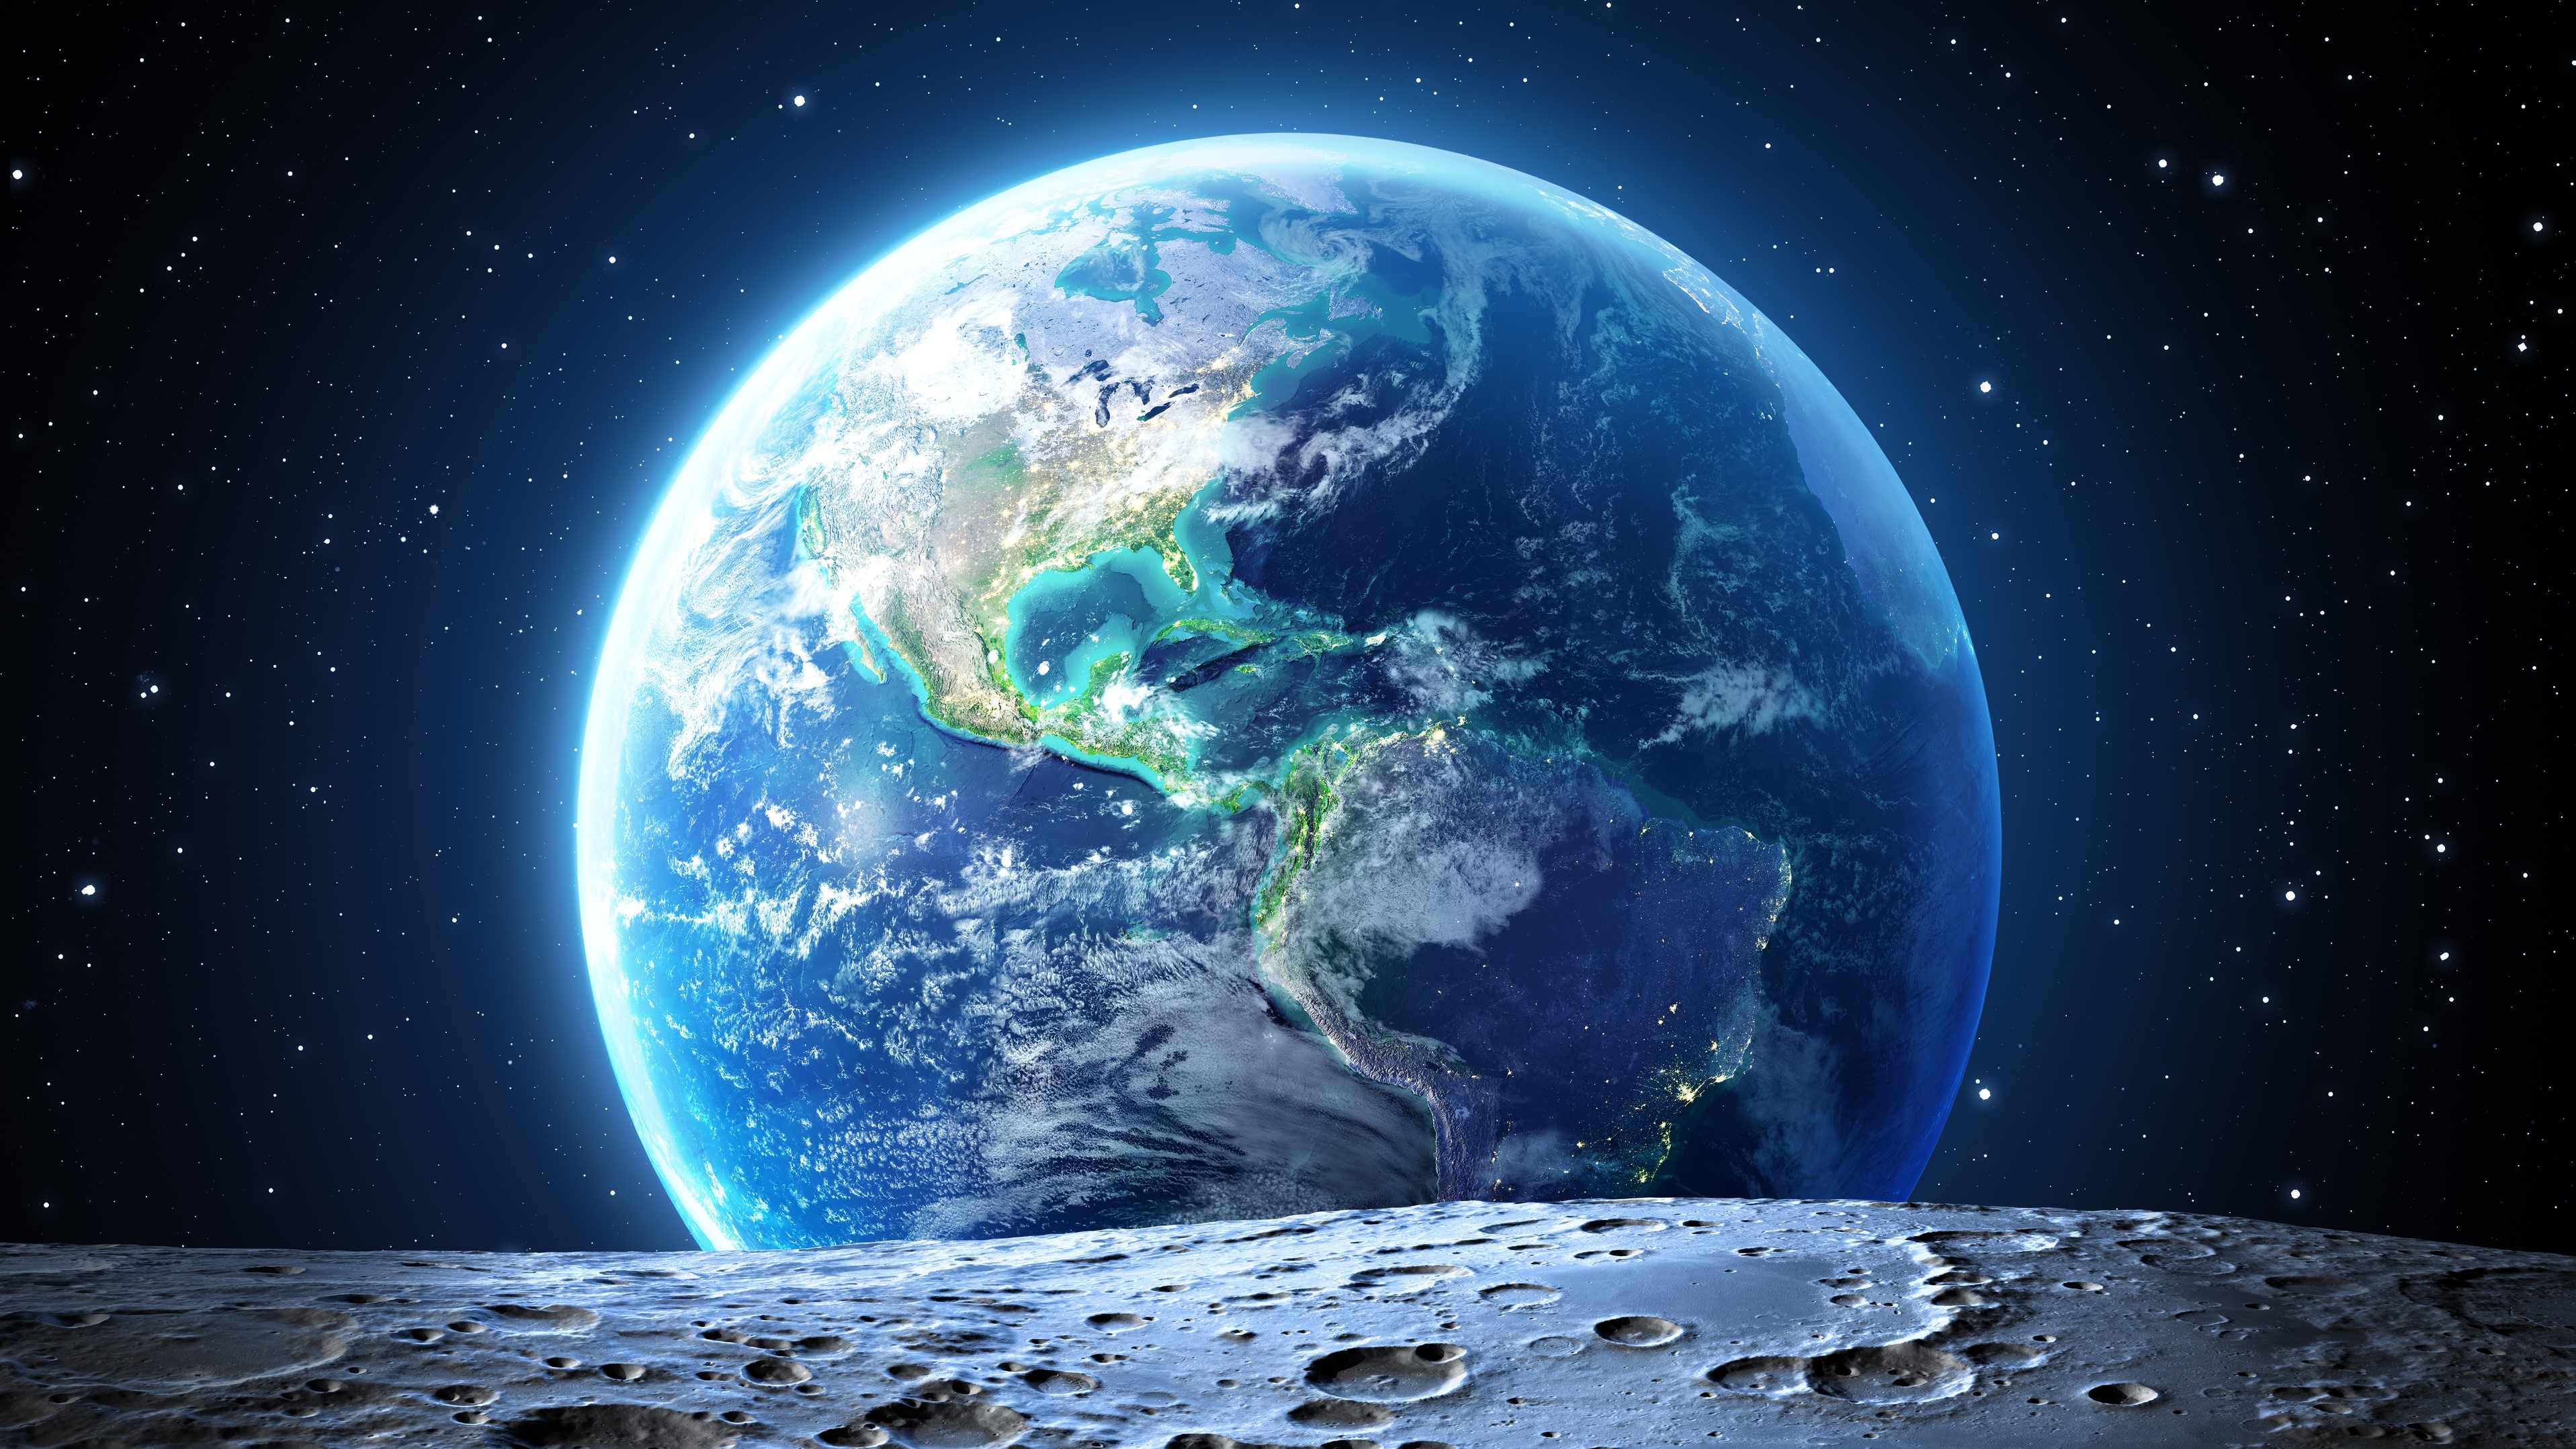 Space World Moon Stars Orbital View Sea Atmosphere Digital Art 3834x2157